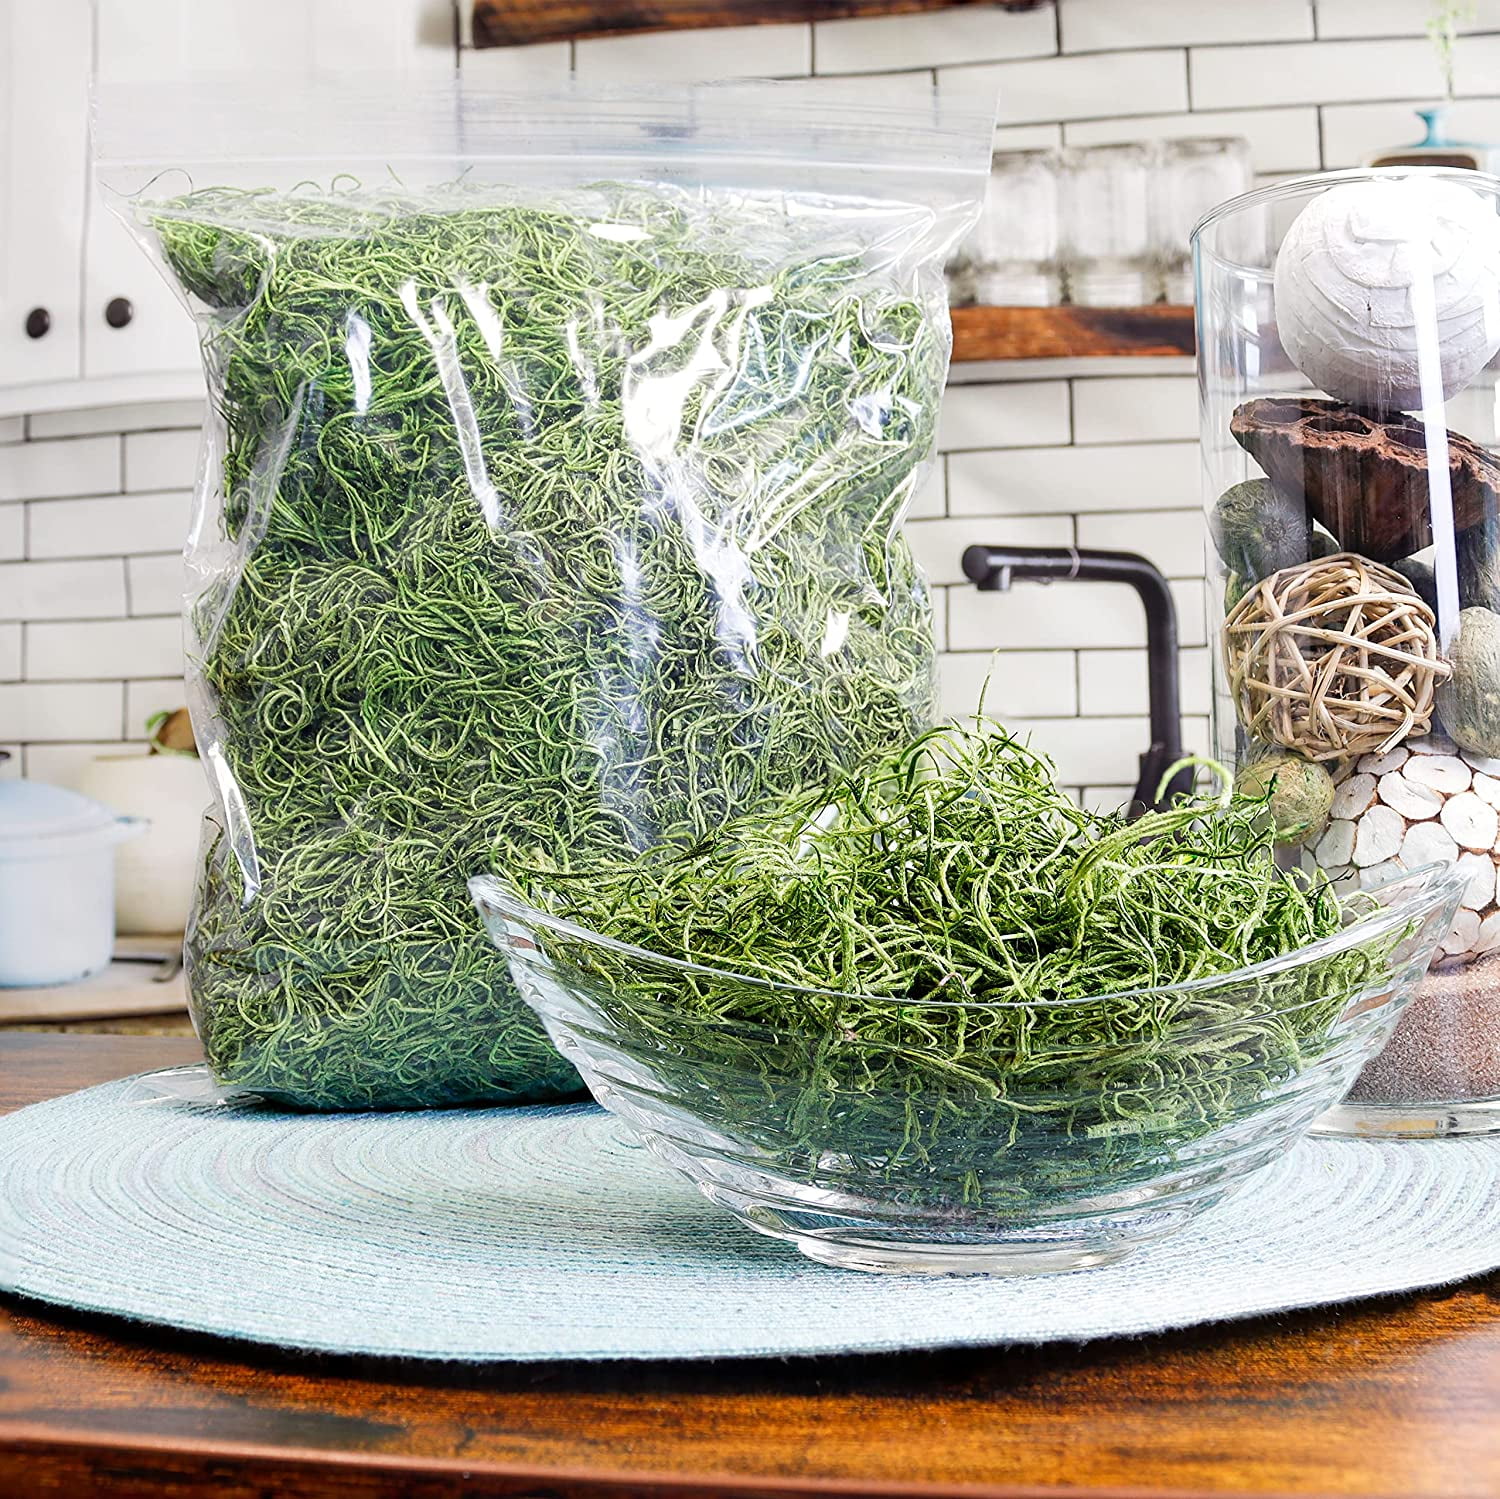 Spanish Moss - Natural 4 oz Bag – The Craft Place USA